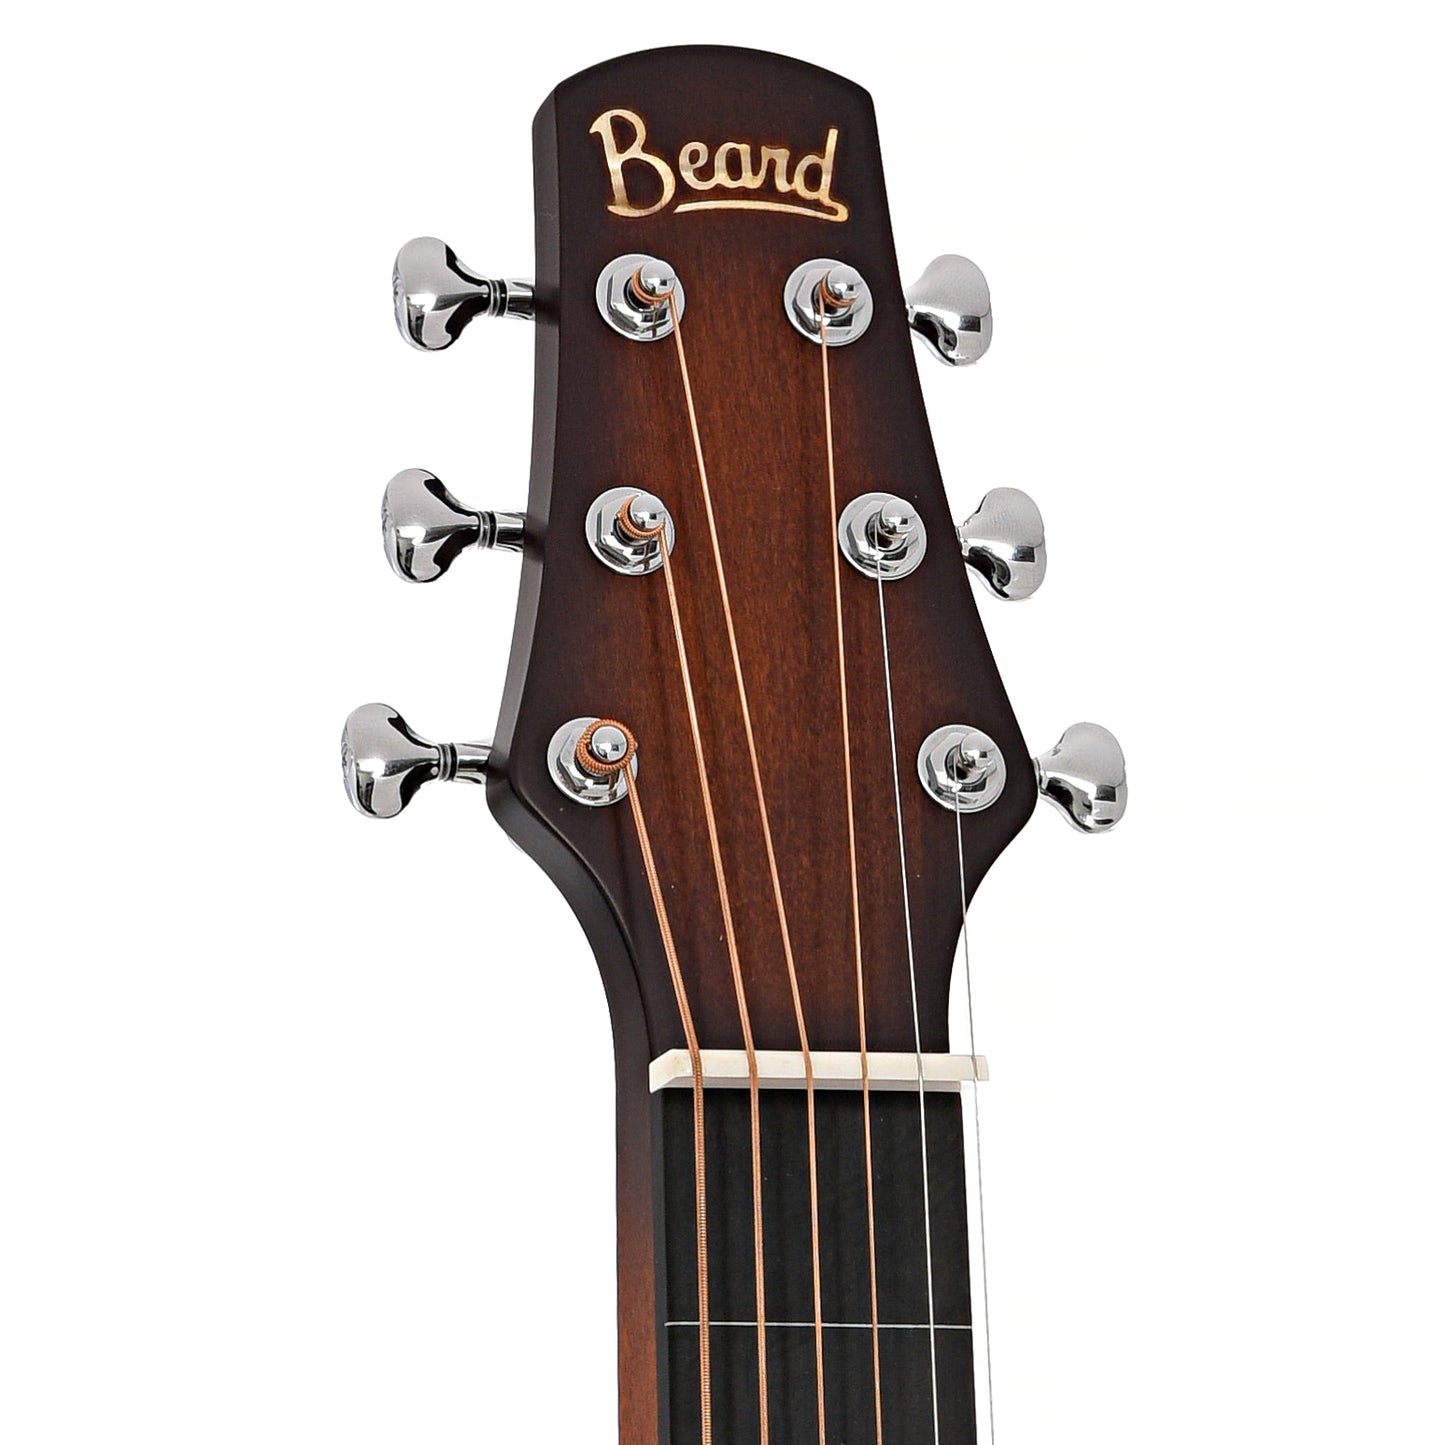 Front headstock of Beard Josh Swift Standard Squareneck Resonator Guitar with Signature Inlays